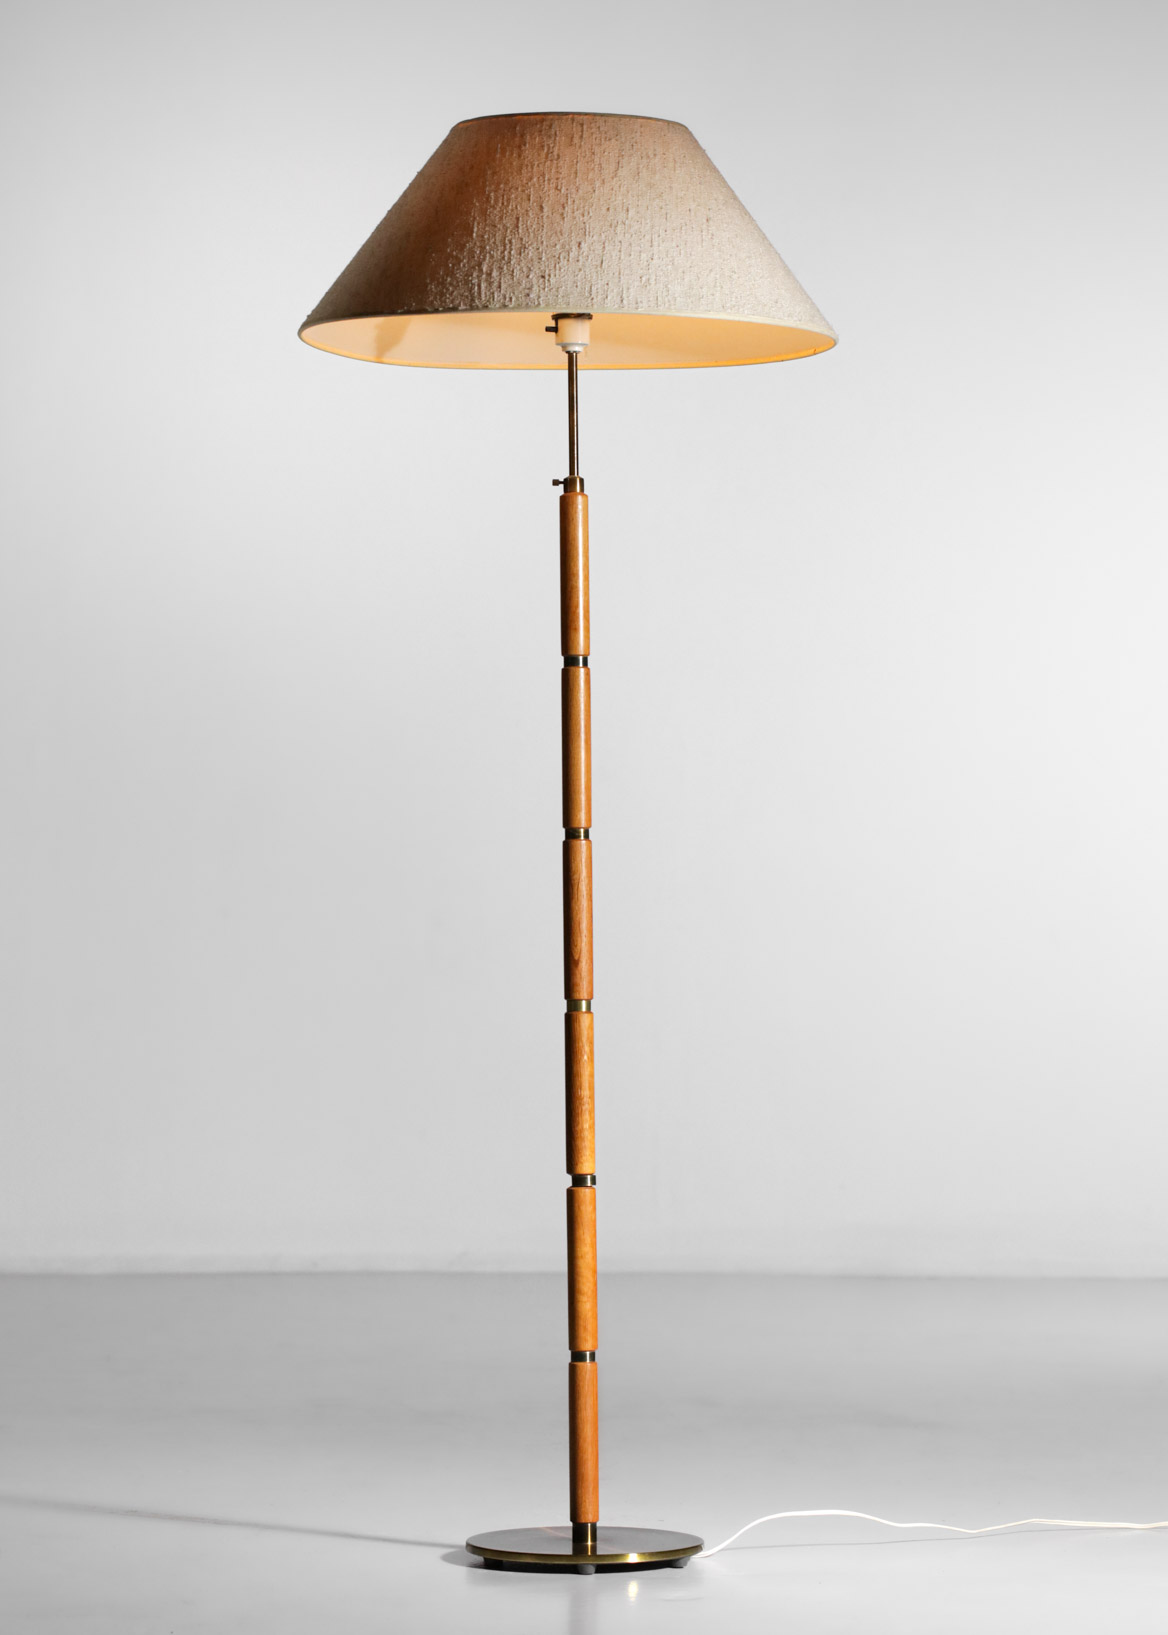 kold hjælper bøf swedish floor lamp in brass and teak from the 70's style paavo tynell –  G075 – Danke Galerie